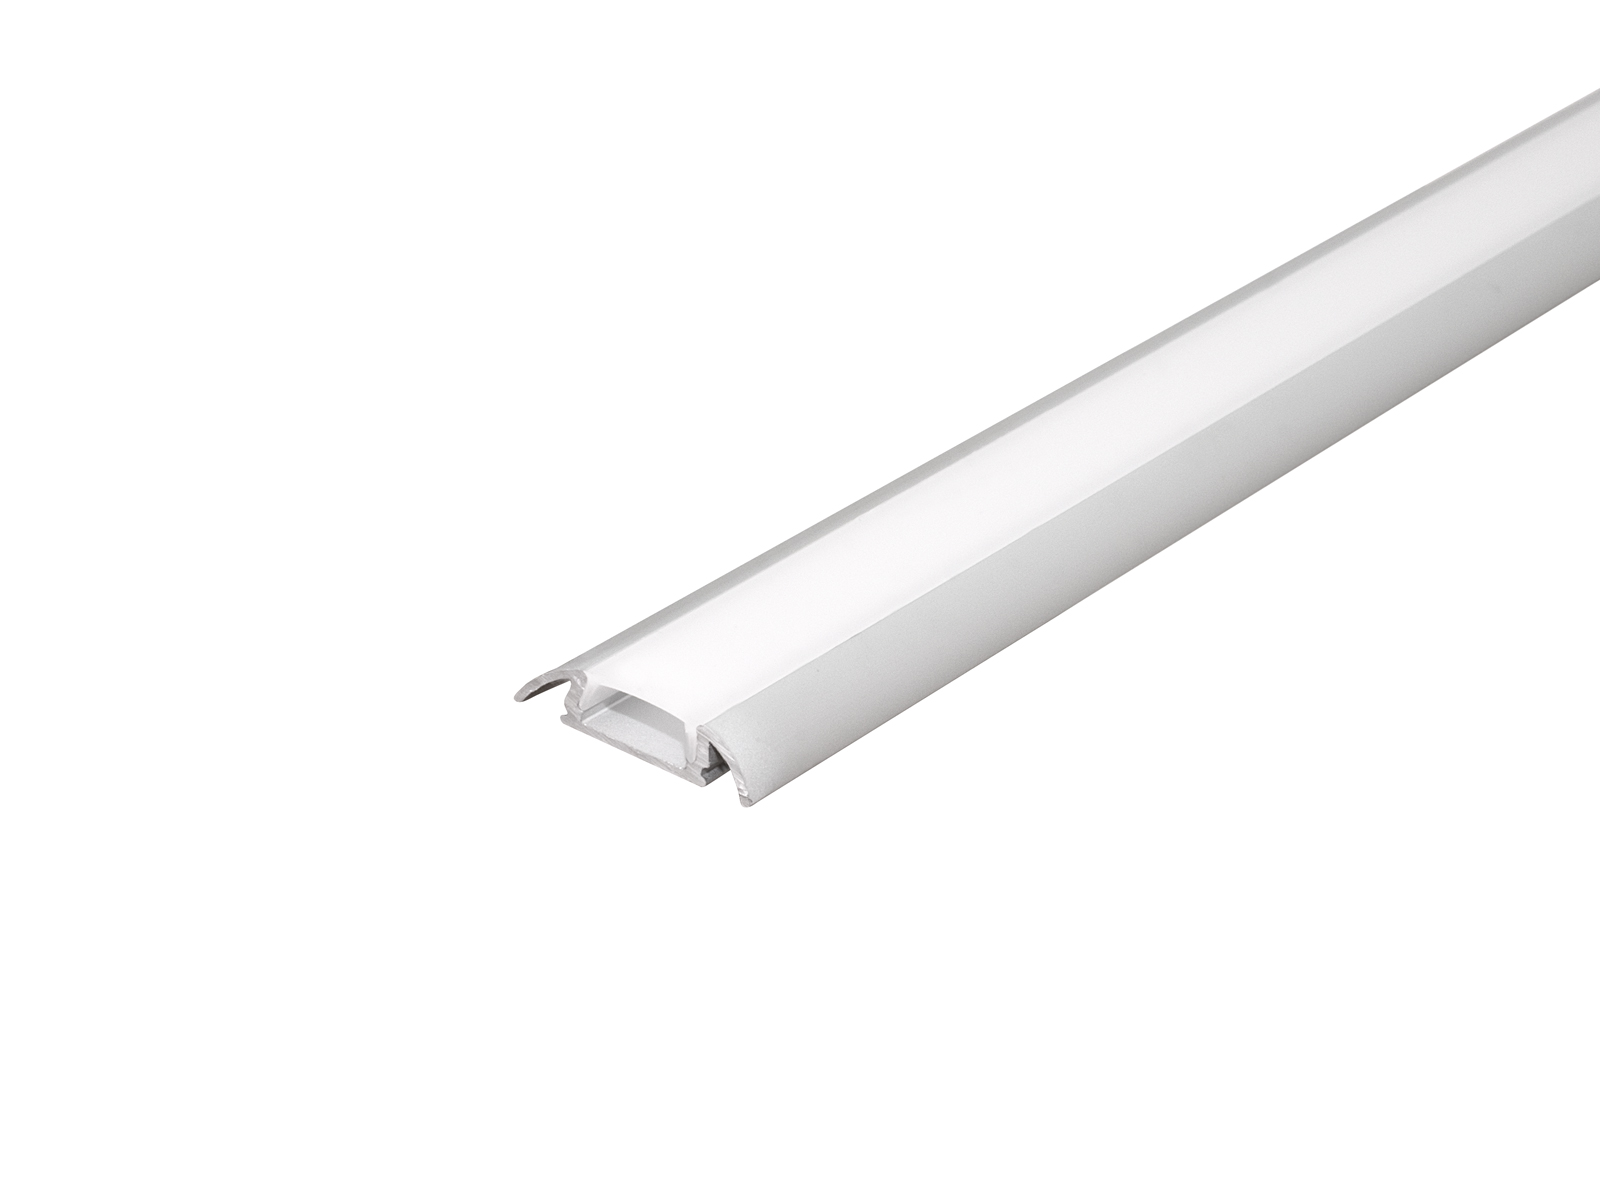 LED Profil Flachprofil AL-PU8 silber mit Abdeckung 2m kaufen | PUR-LED